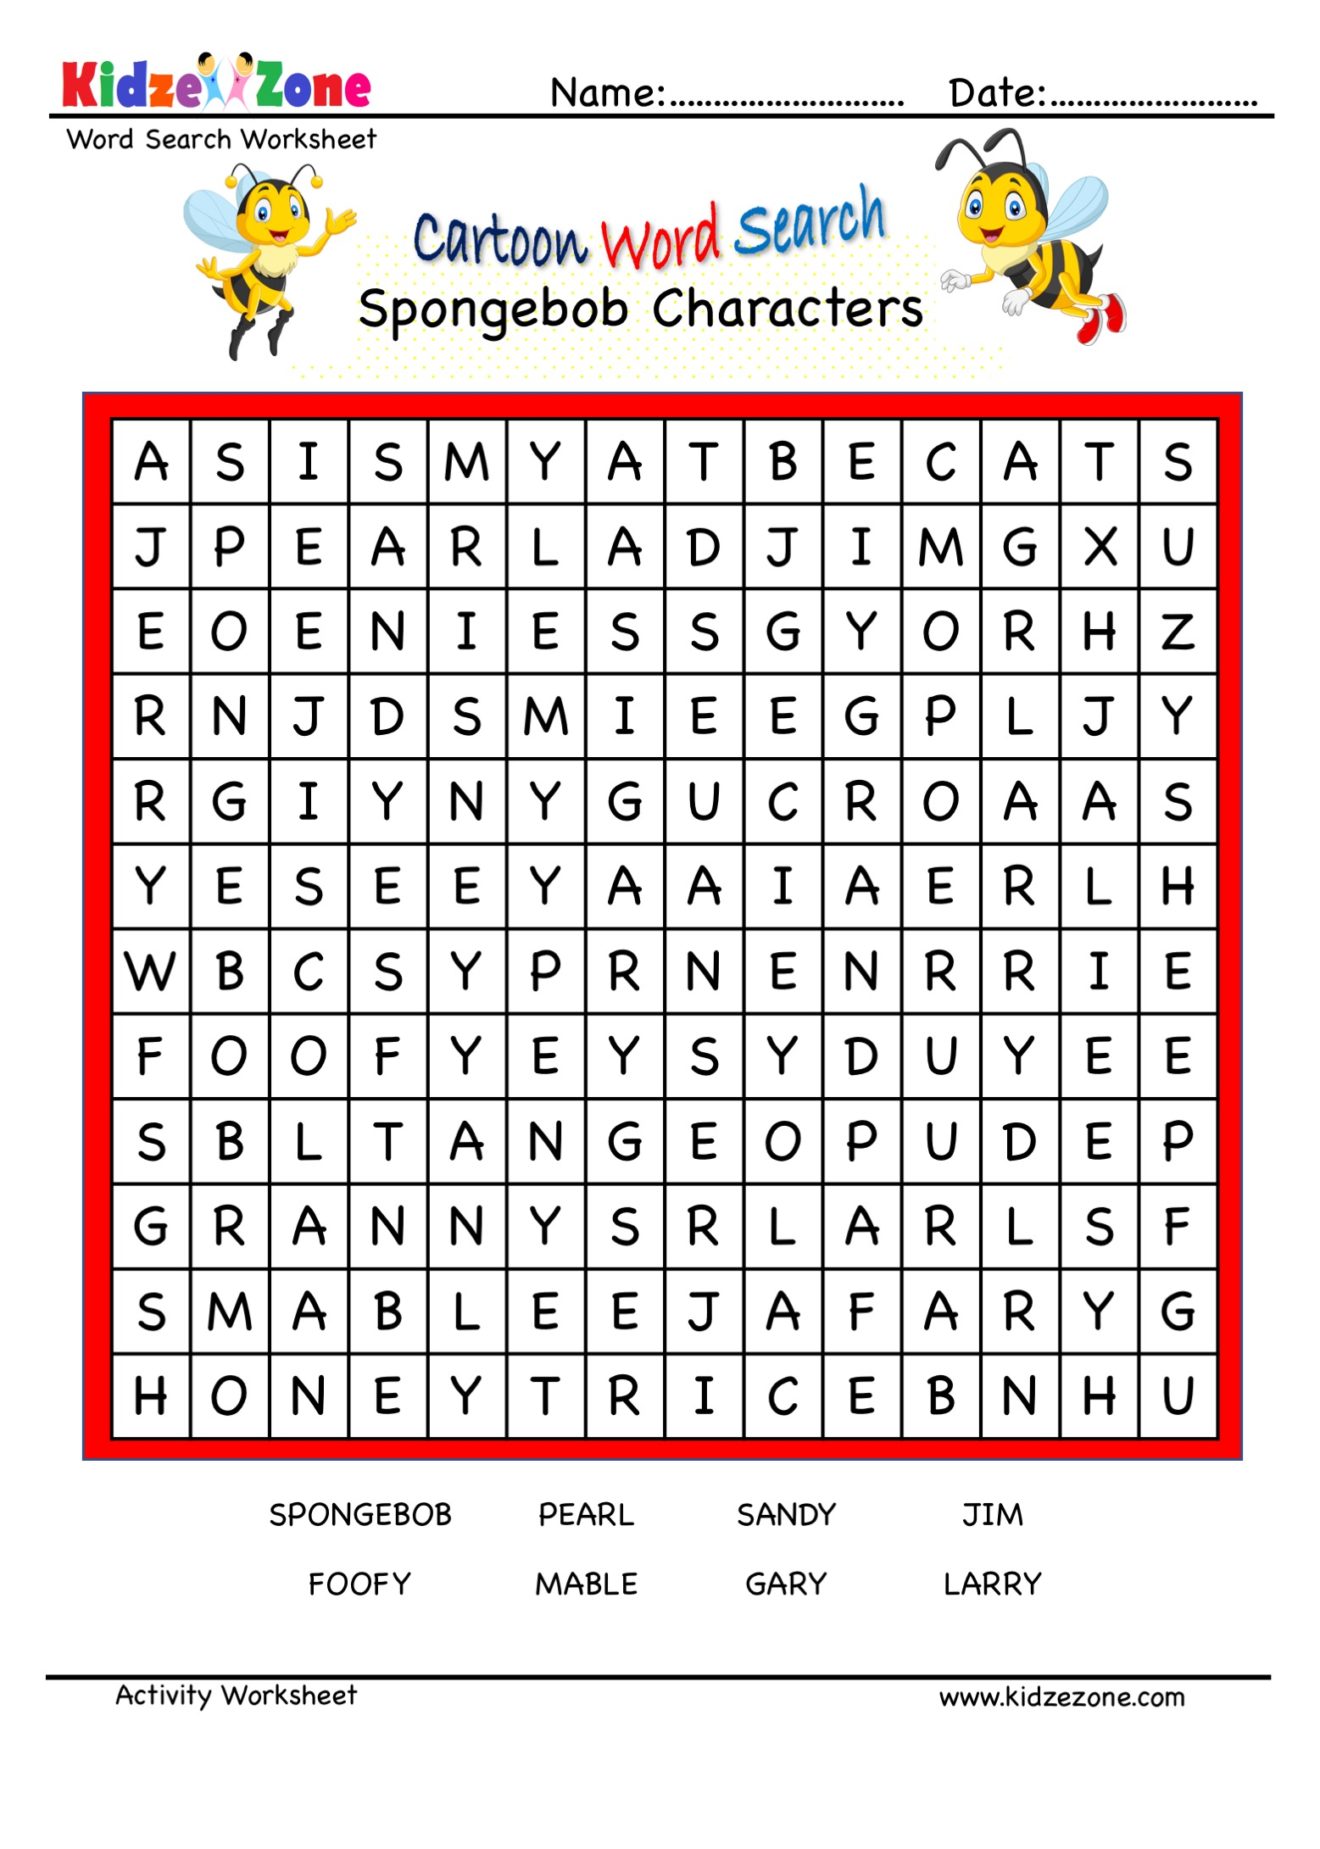 SpongeBob Character Search Worksheet KidzeZone